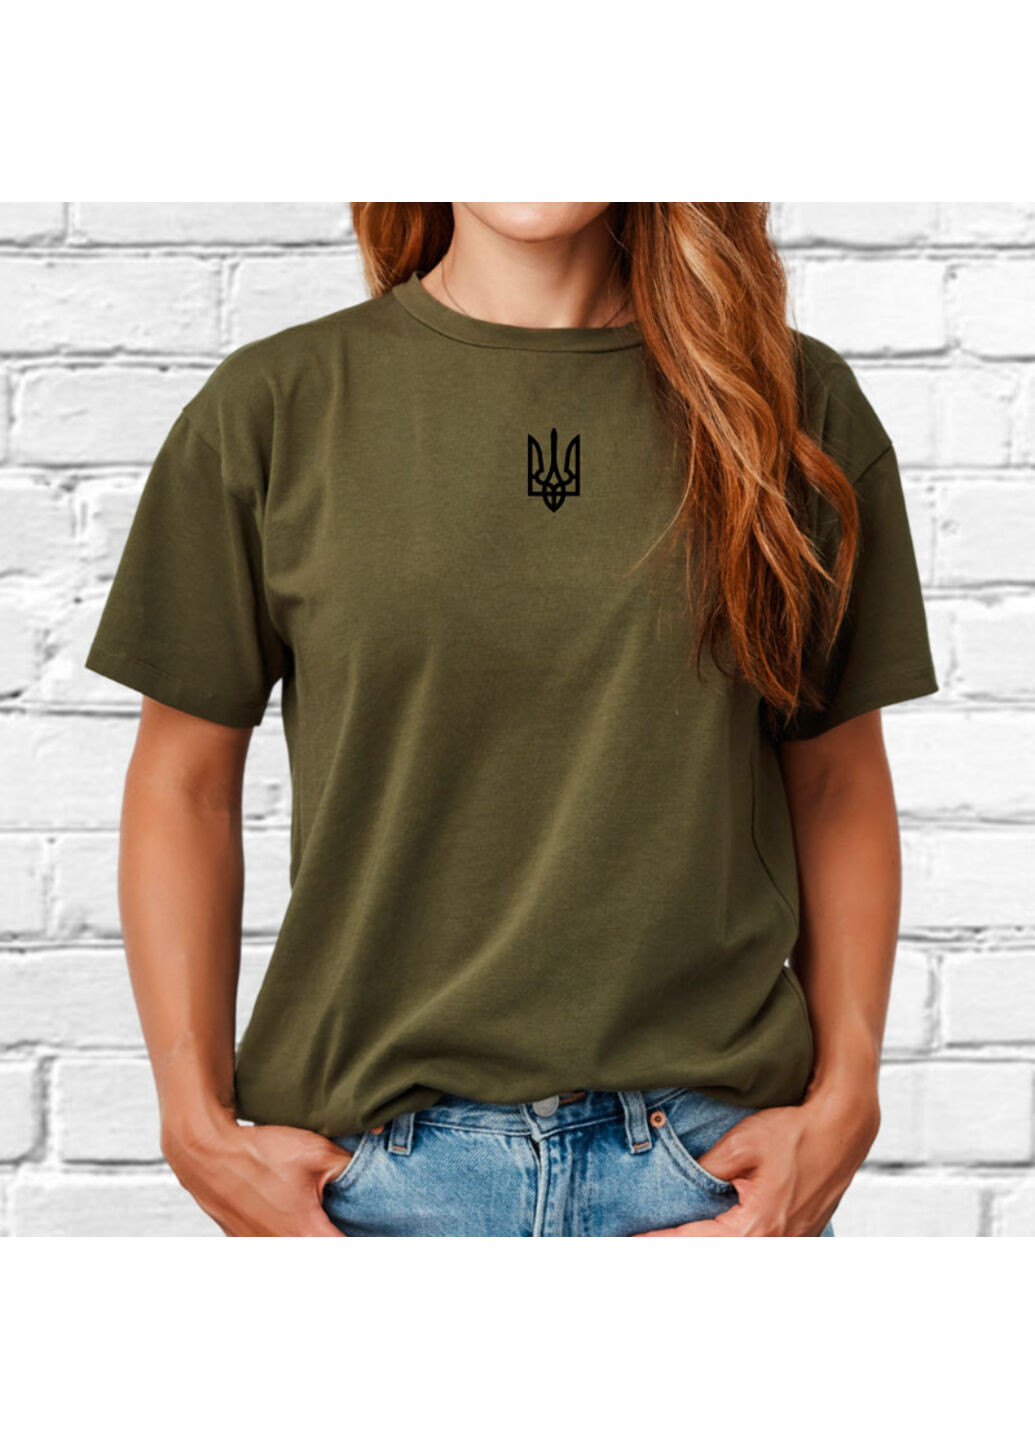 Хаки (оливковая) футболка з вишивкою чорного тризуба женская хаки m No Brand